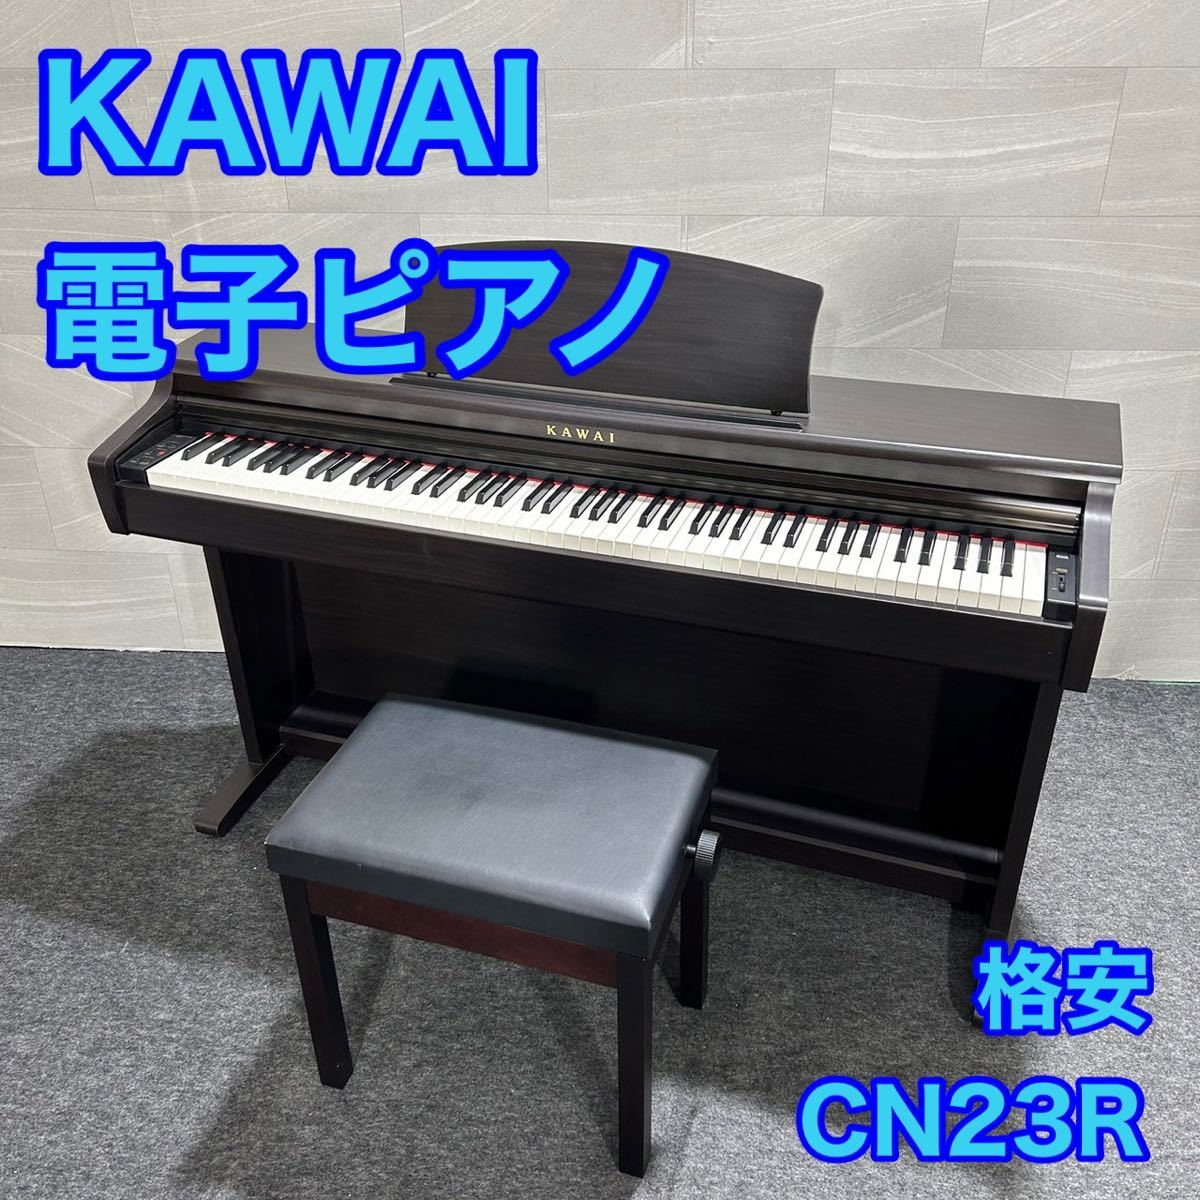 KAWAI カワイ 電子ピアノ CN23R 音楽 楽器 格安 鍵盤楽器 d1840 お買い得 初心者向け